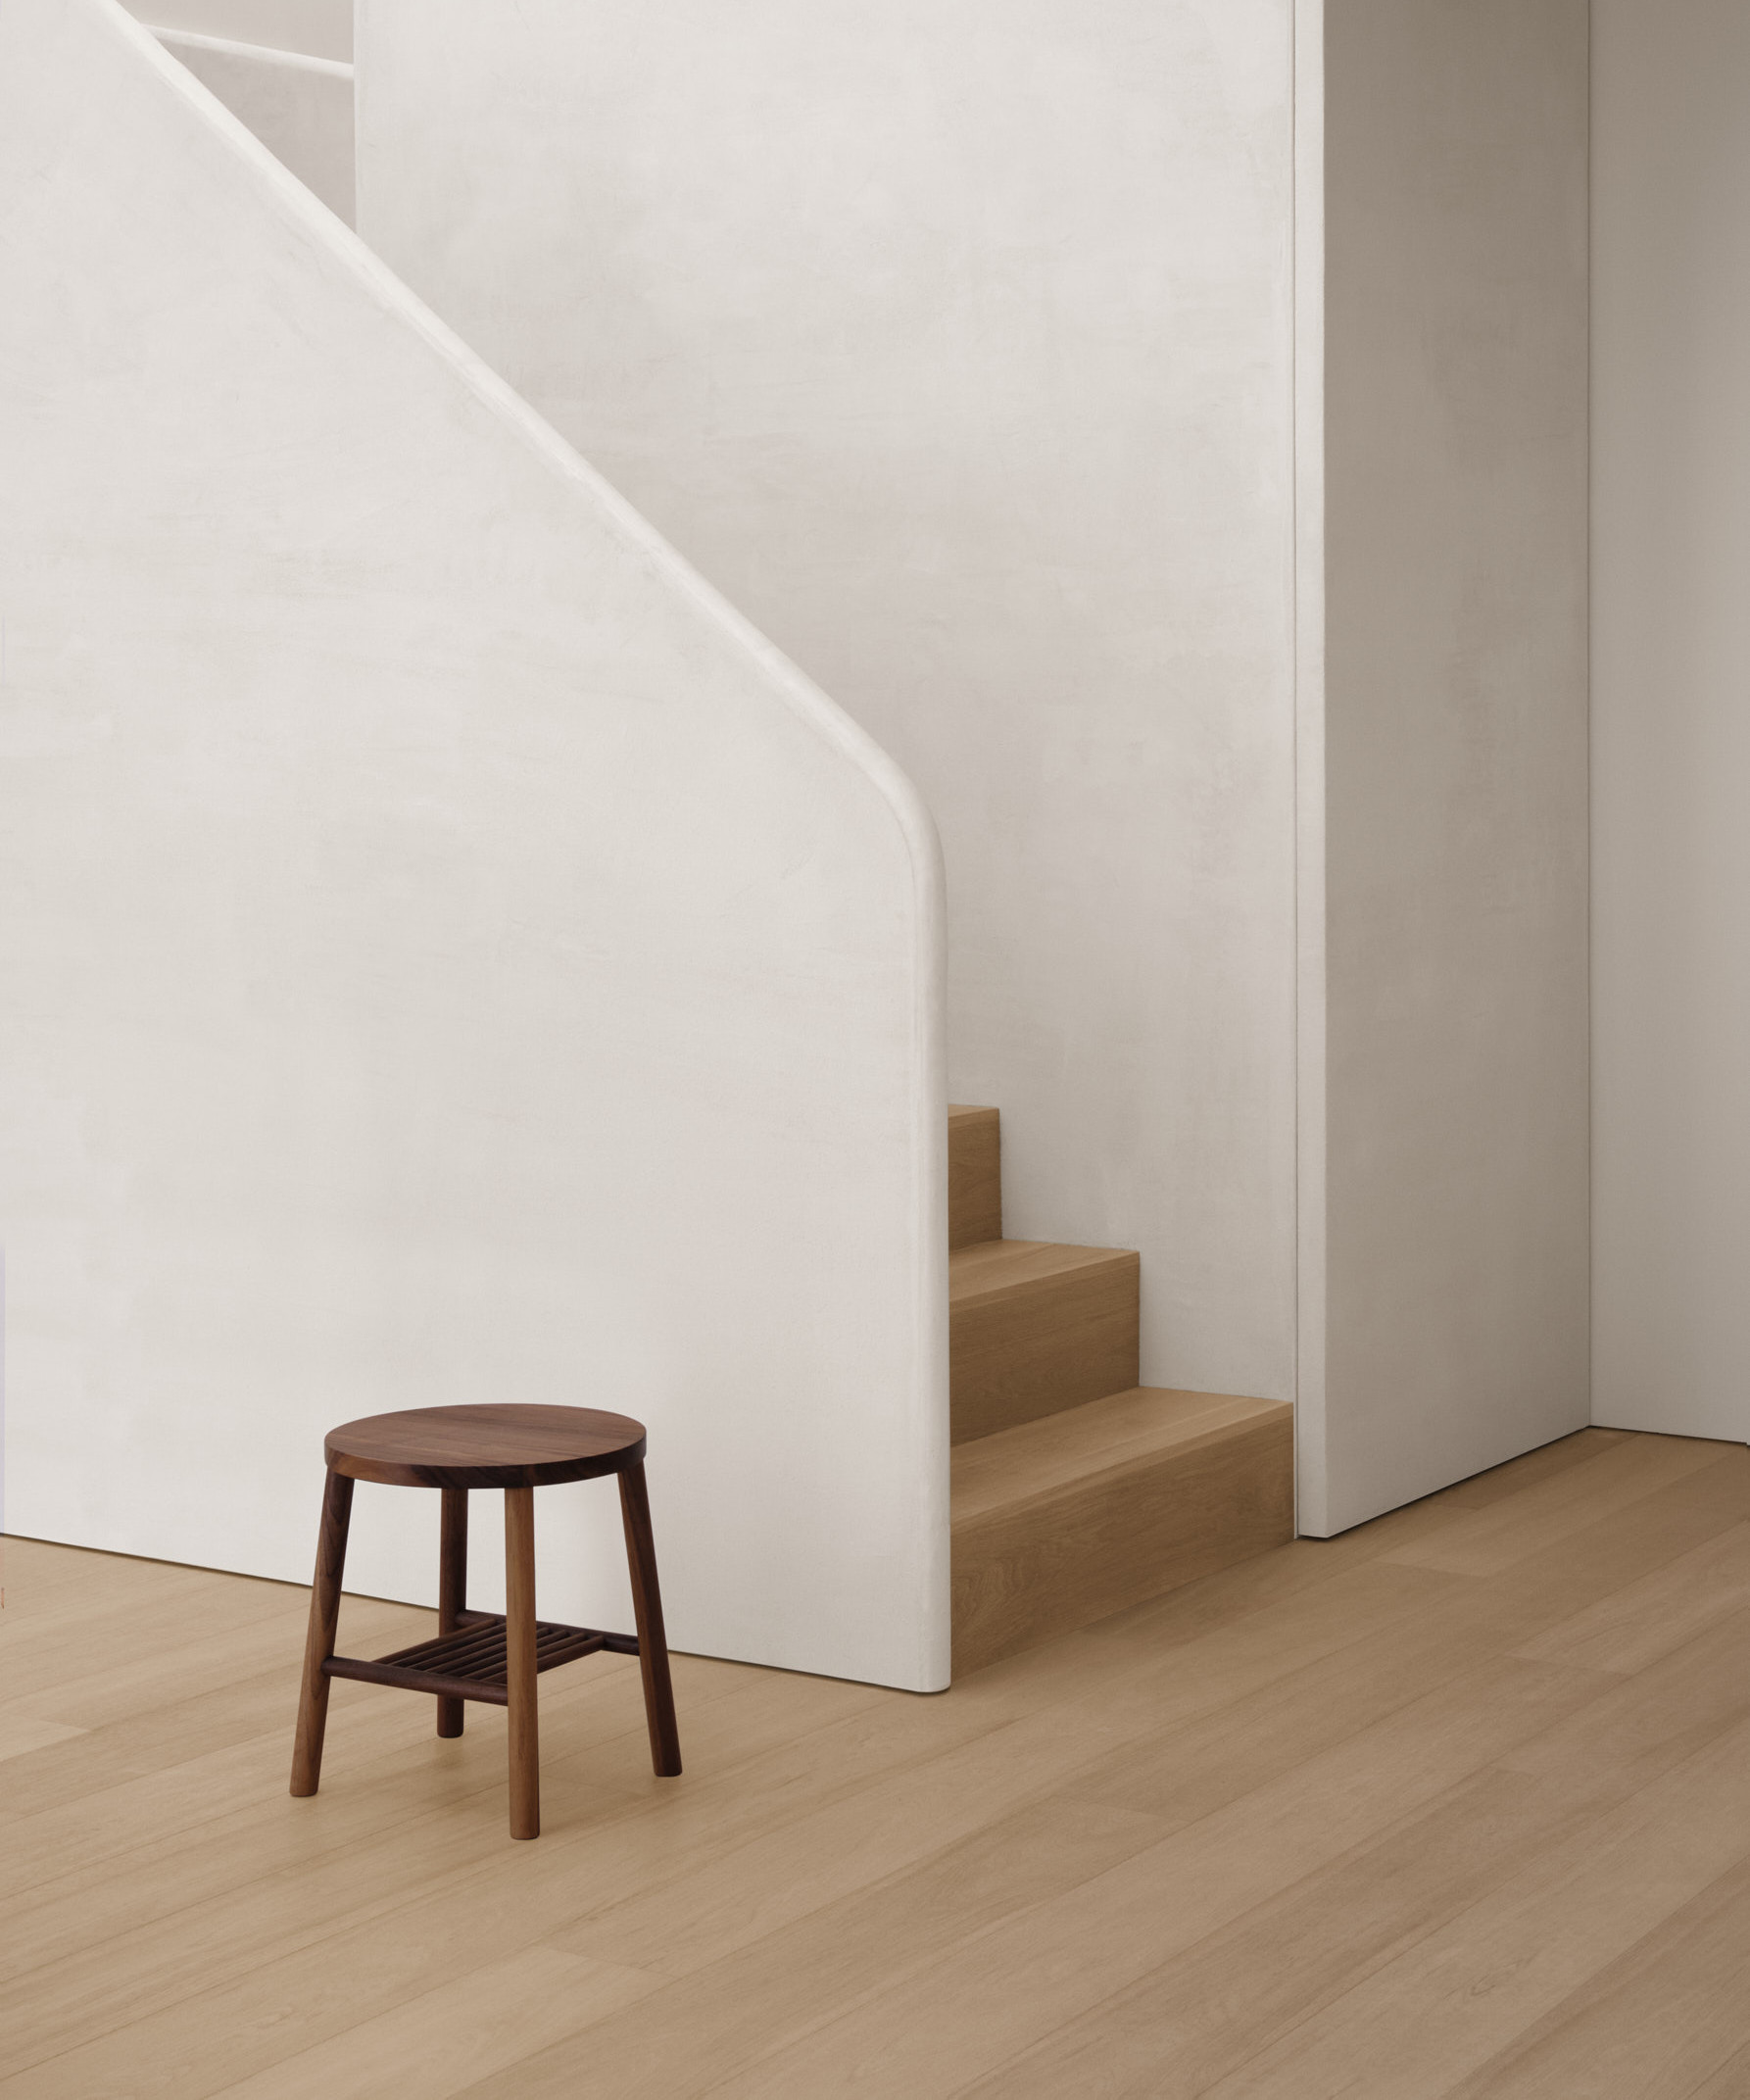 walnut stool against textured stair case